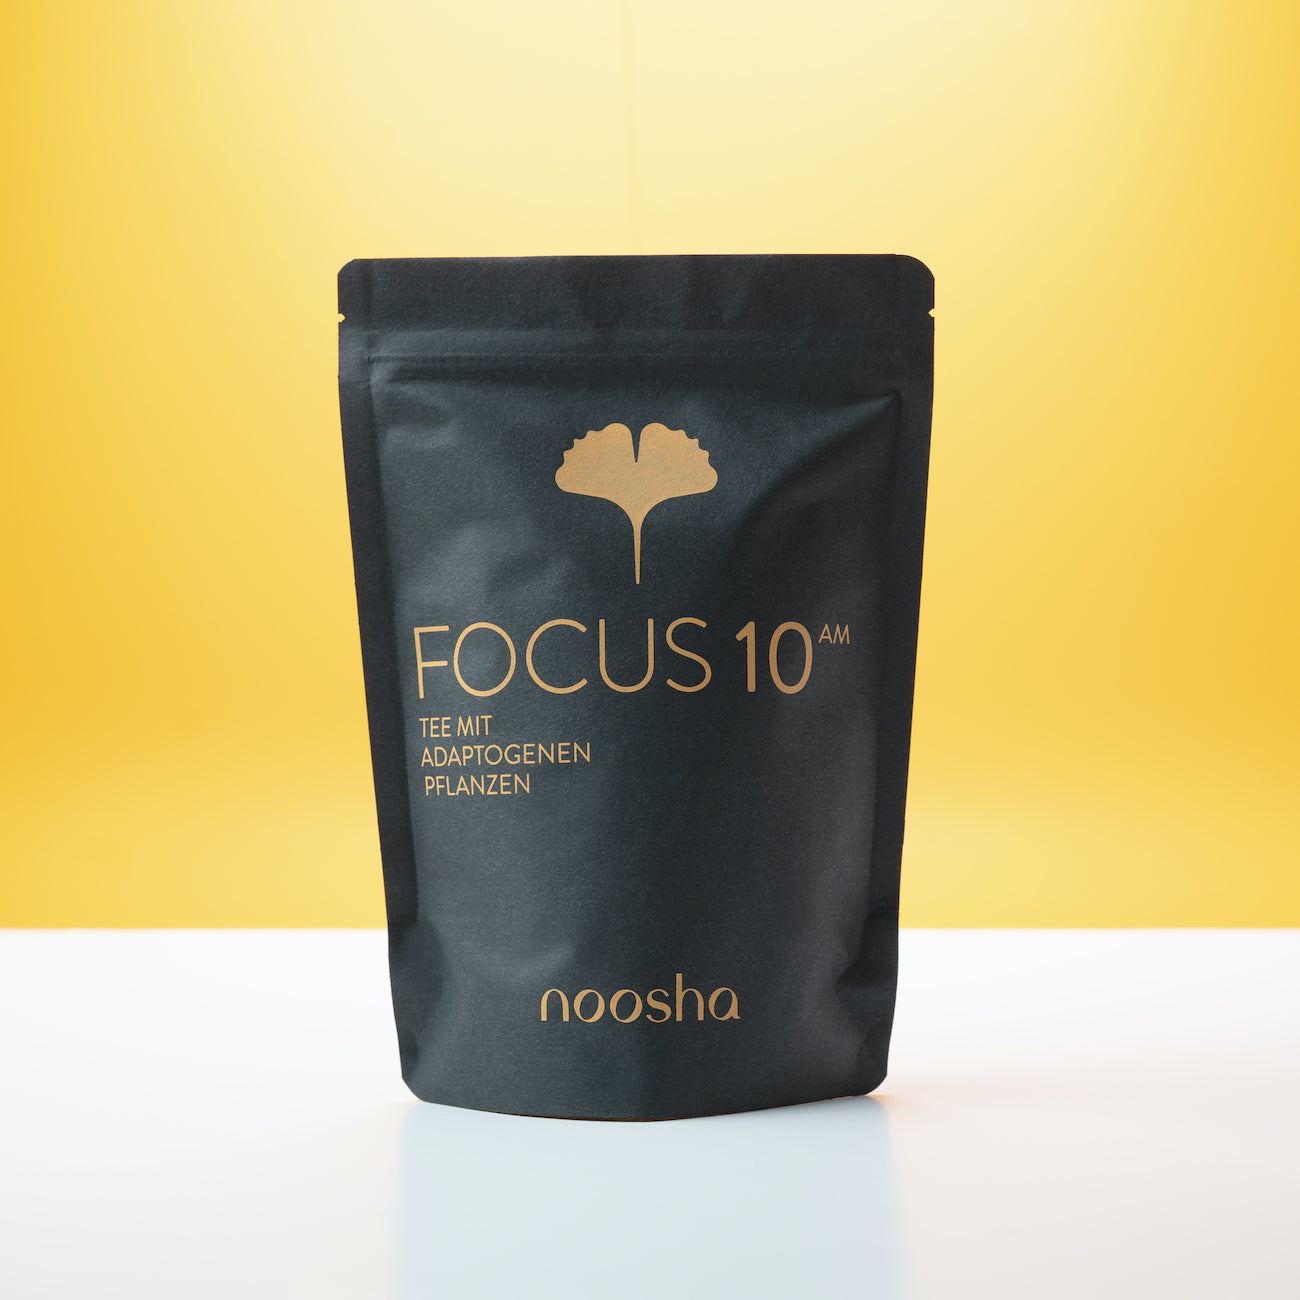  Packaging of FOCUS 10AM tea made by noosha